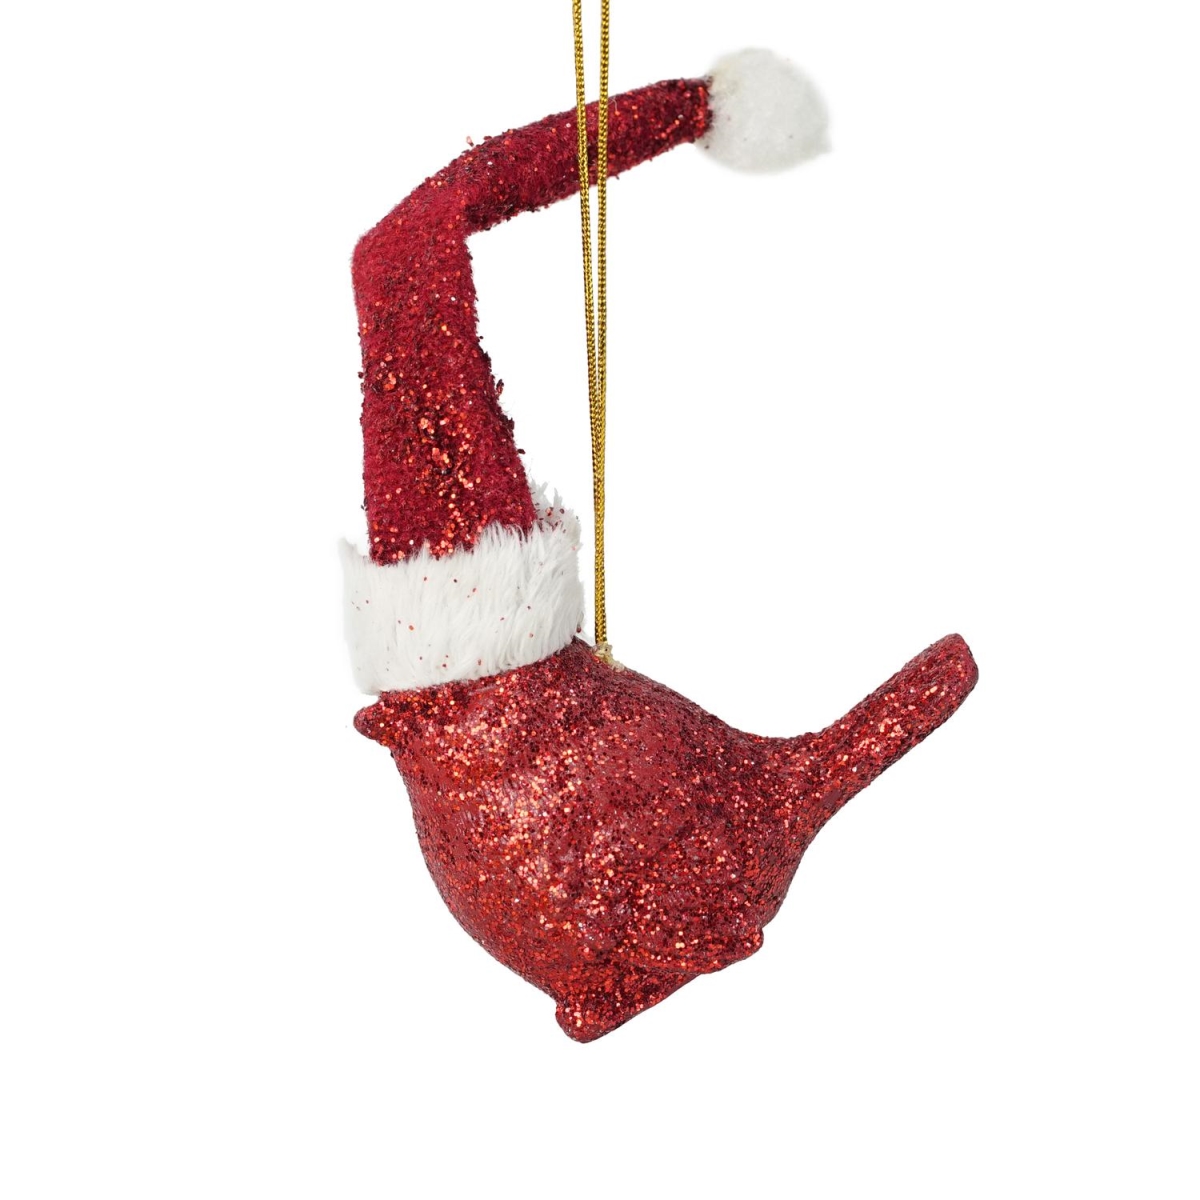 Kurt Adler 30851824 3 In. Red Glittered Cardinal Bird Vertically Perched Christmas Ornament